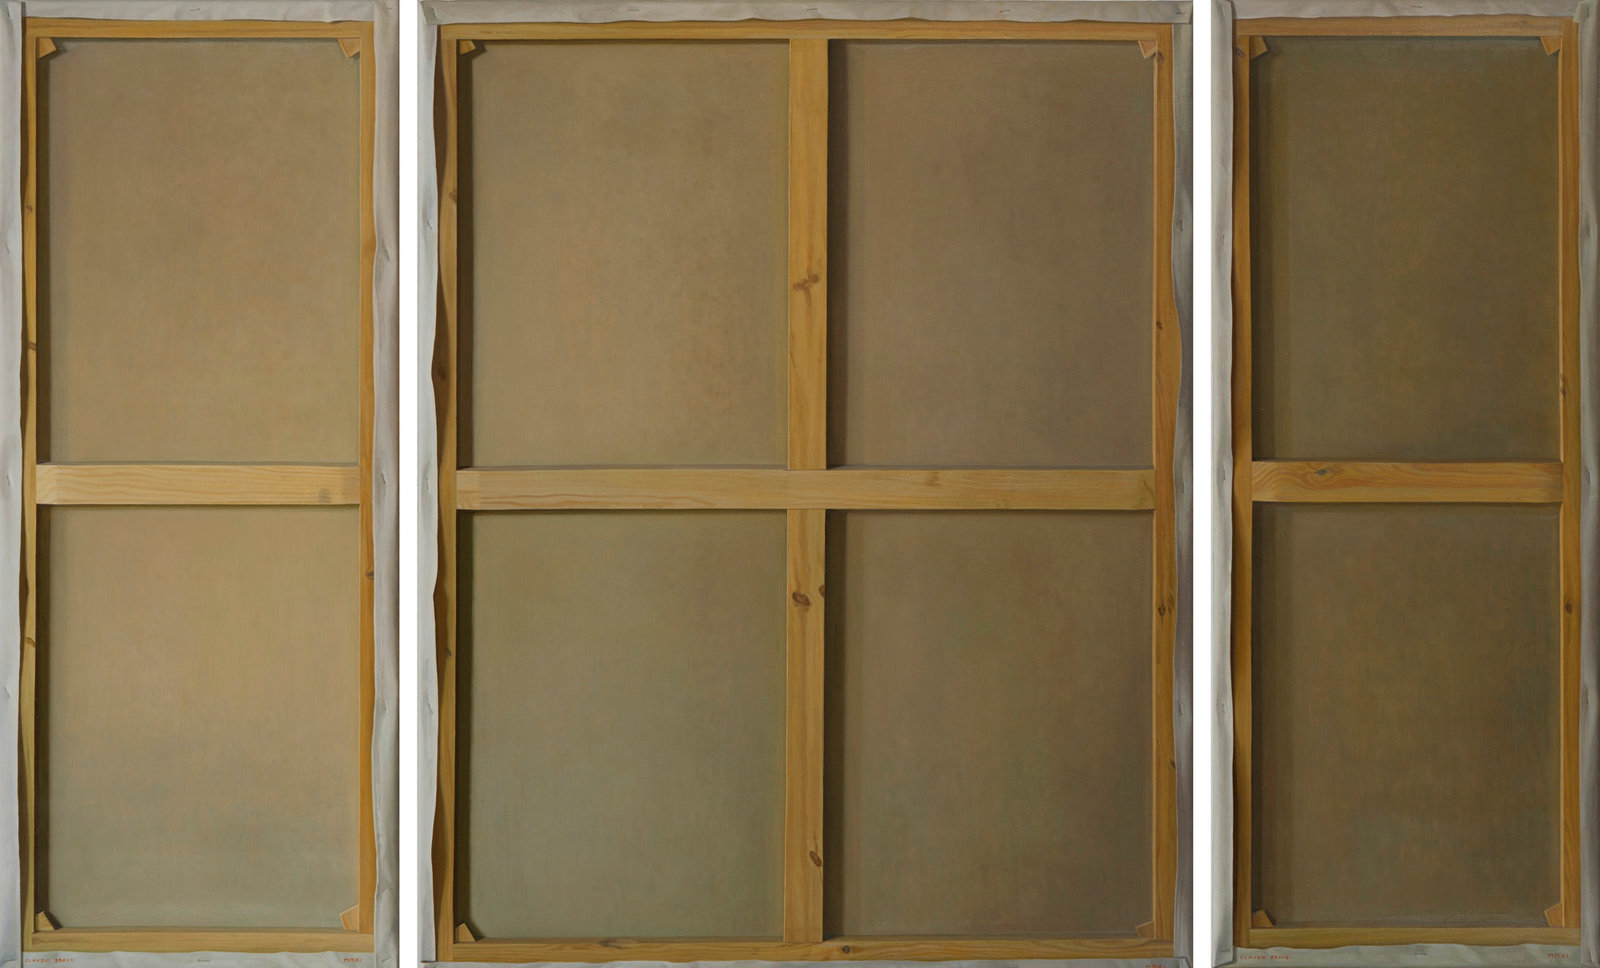 Bravo, triptych (triptico), 2011, oil on canvas, left right panels each 59 x 23 5 8 in, center panel 59 x 47 1 4 in, non 894